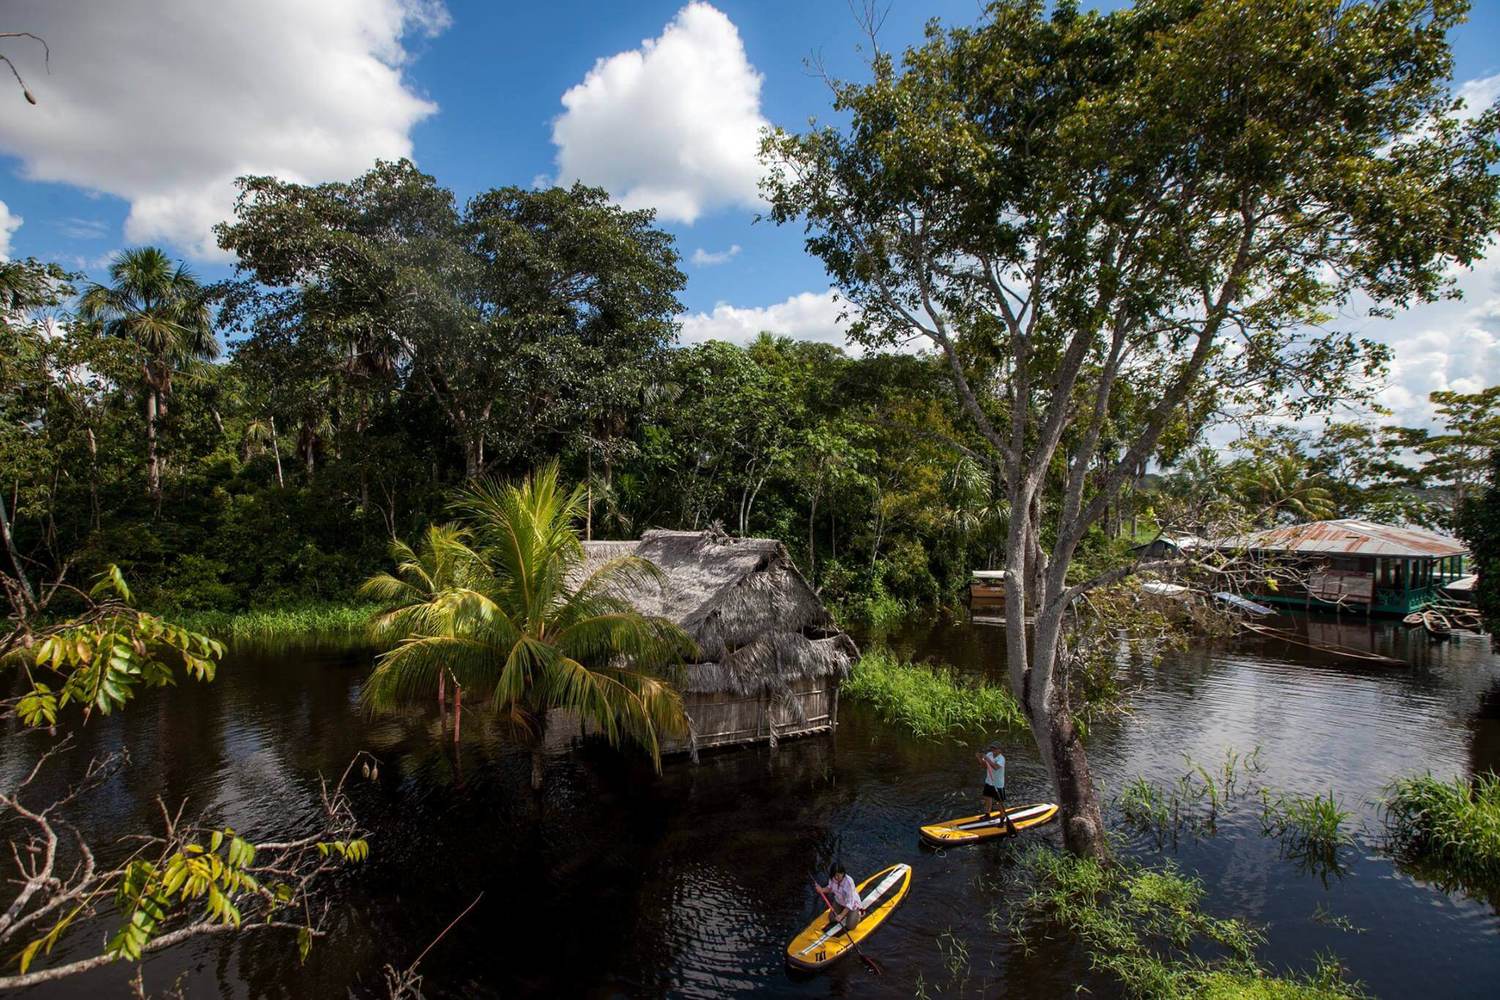 amazon rainforest tourism activities